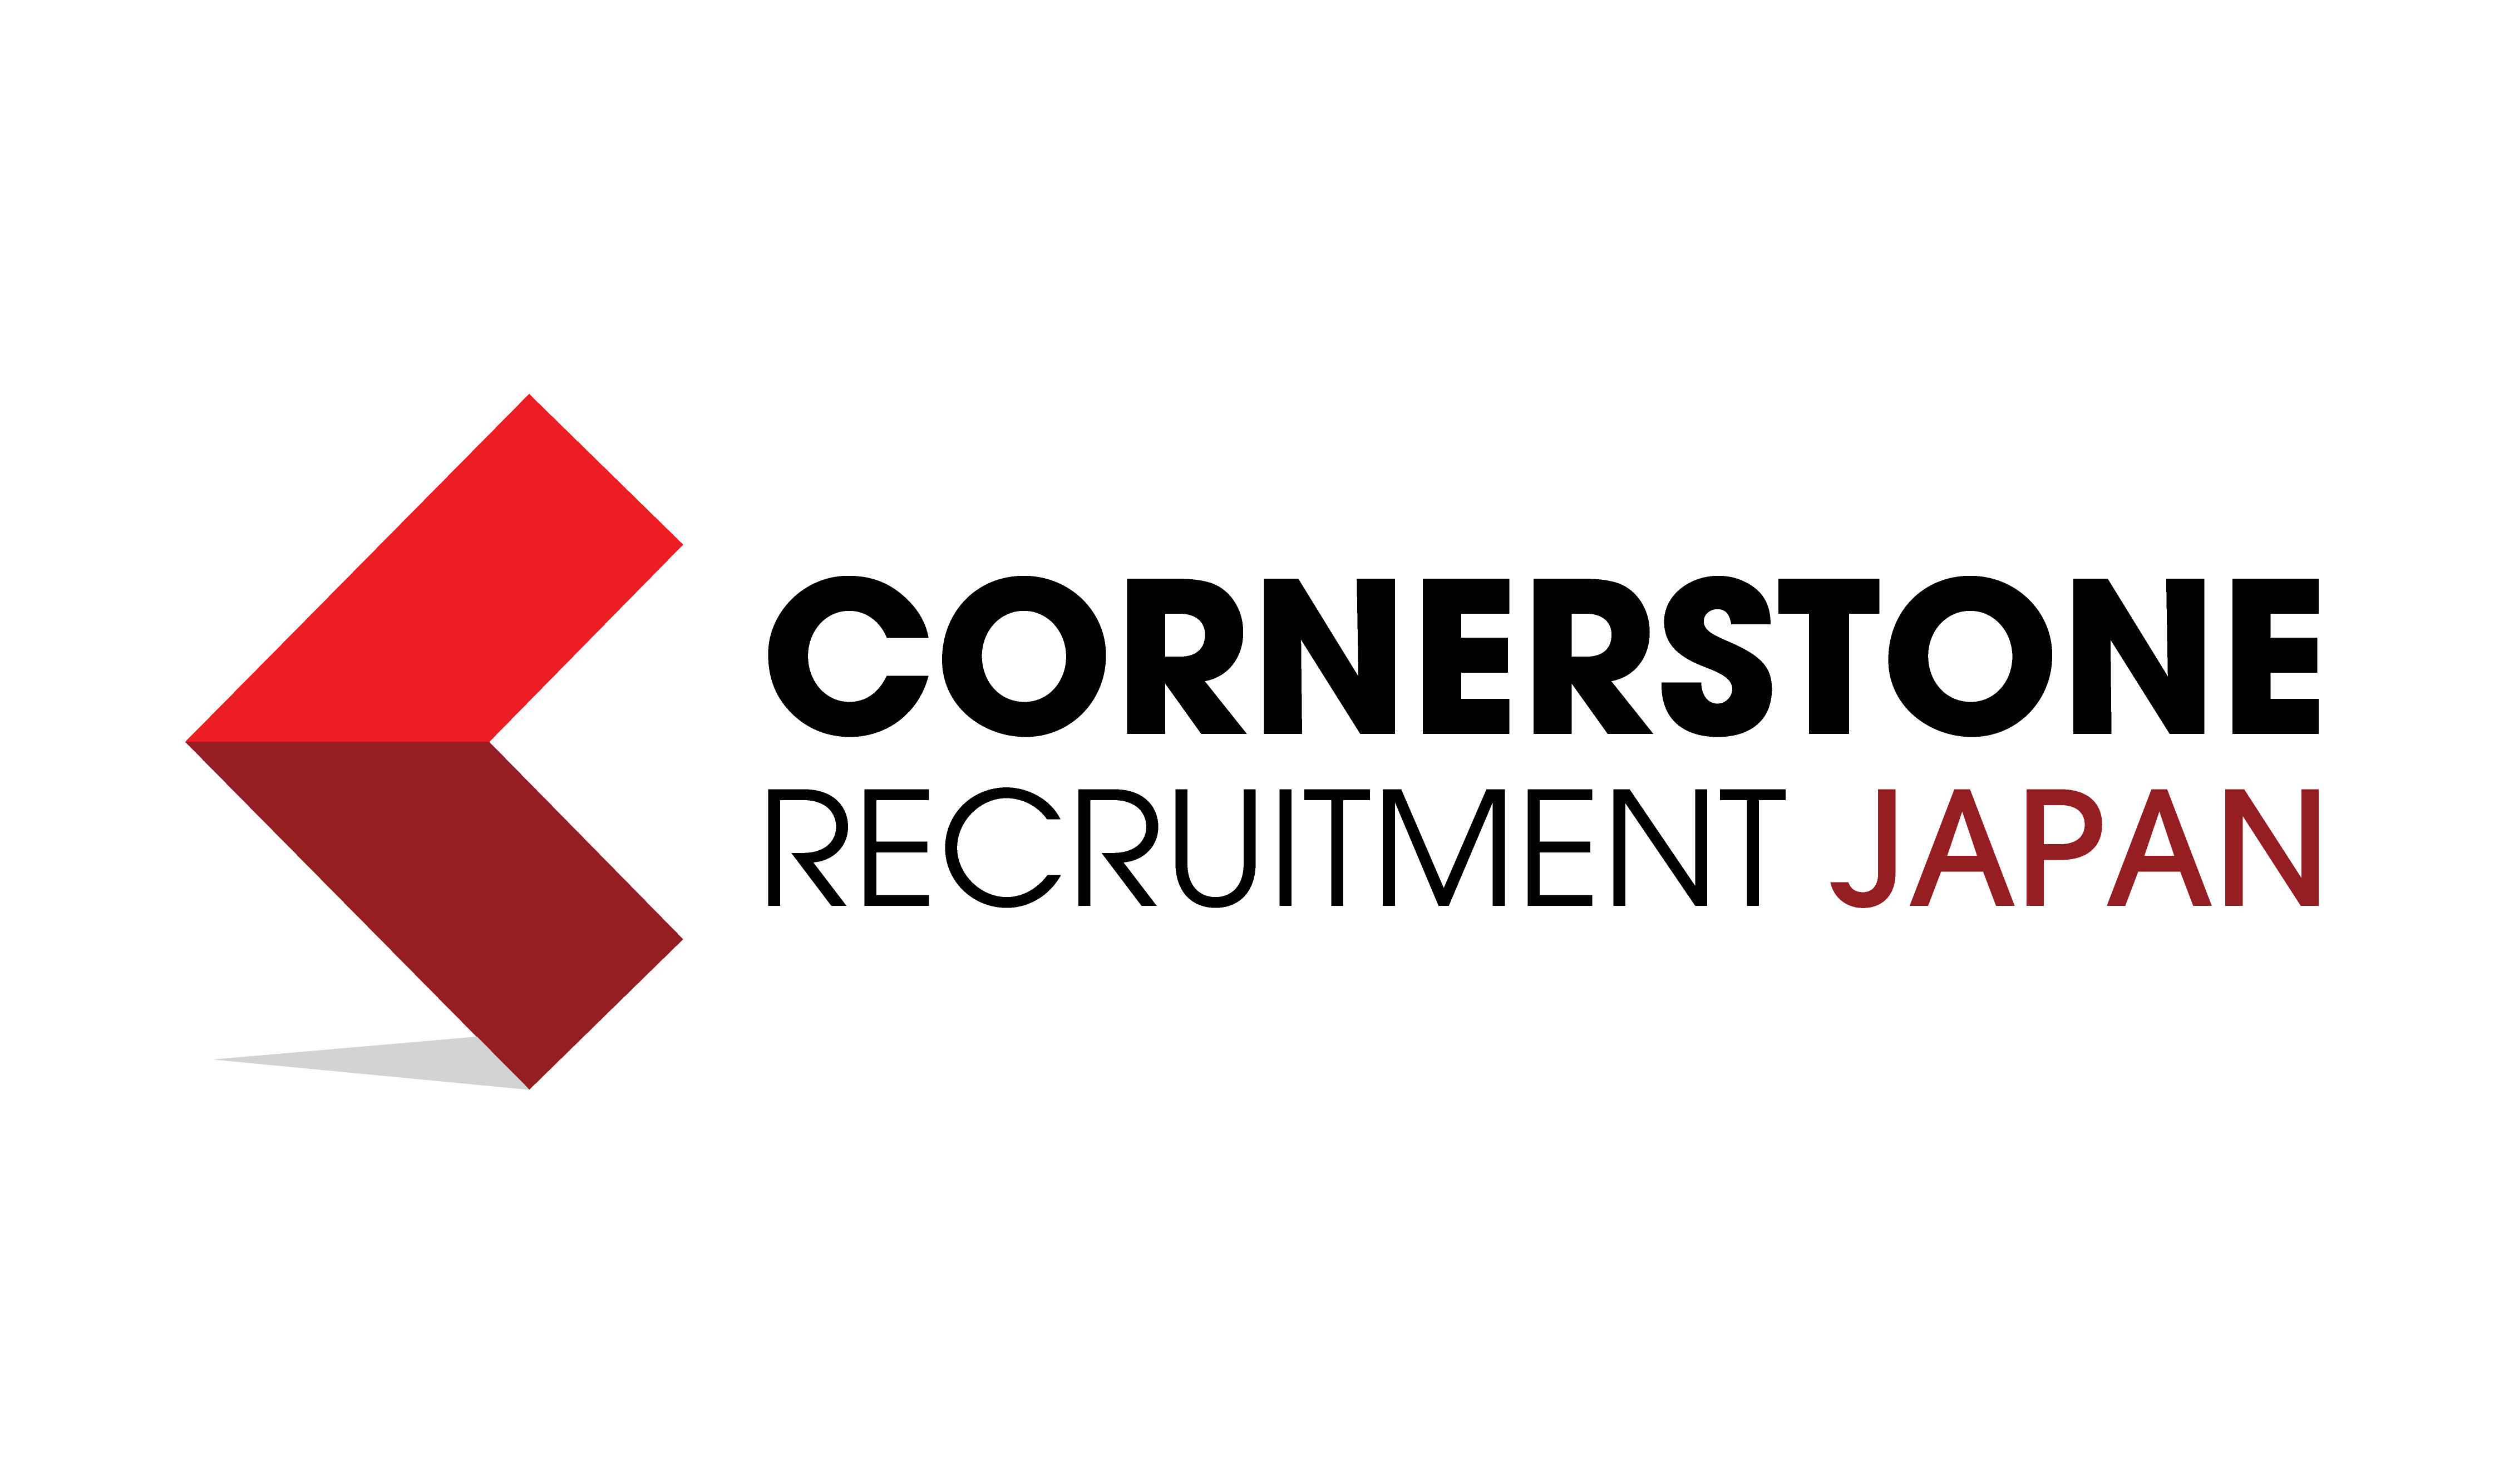 Cornerstone Recruitment Japan